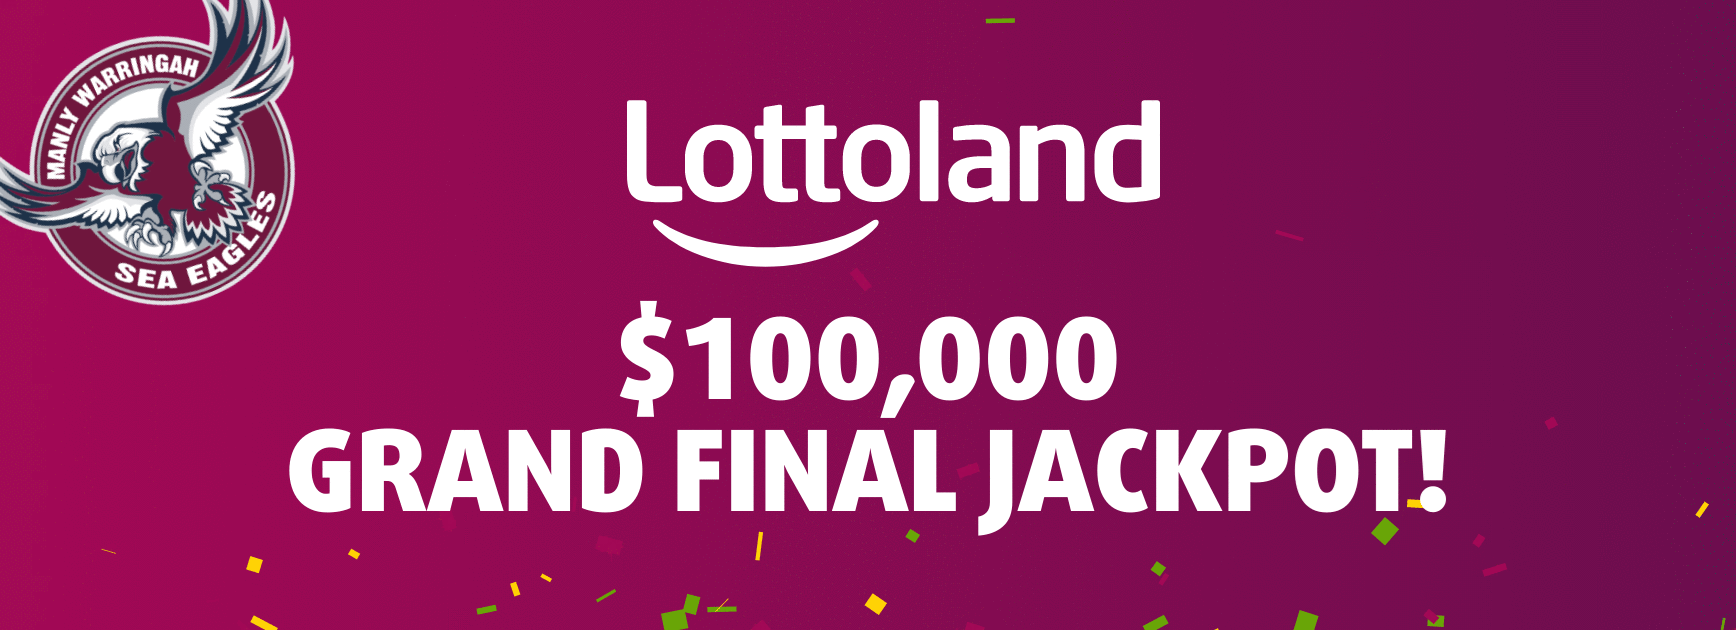 Lottoland offering $100k Jackpot Bonus for Sea Eagles